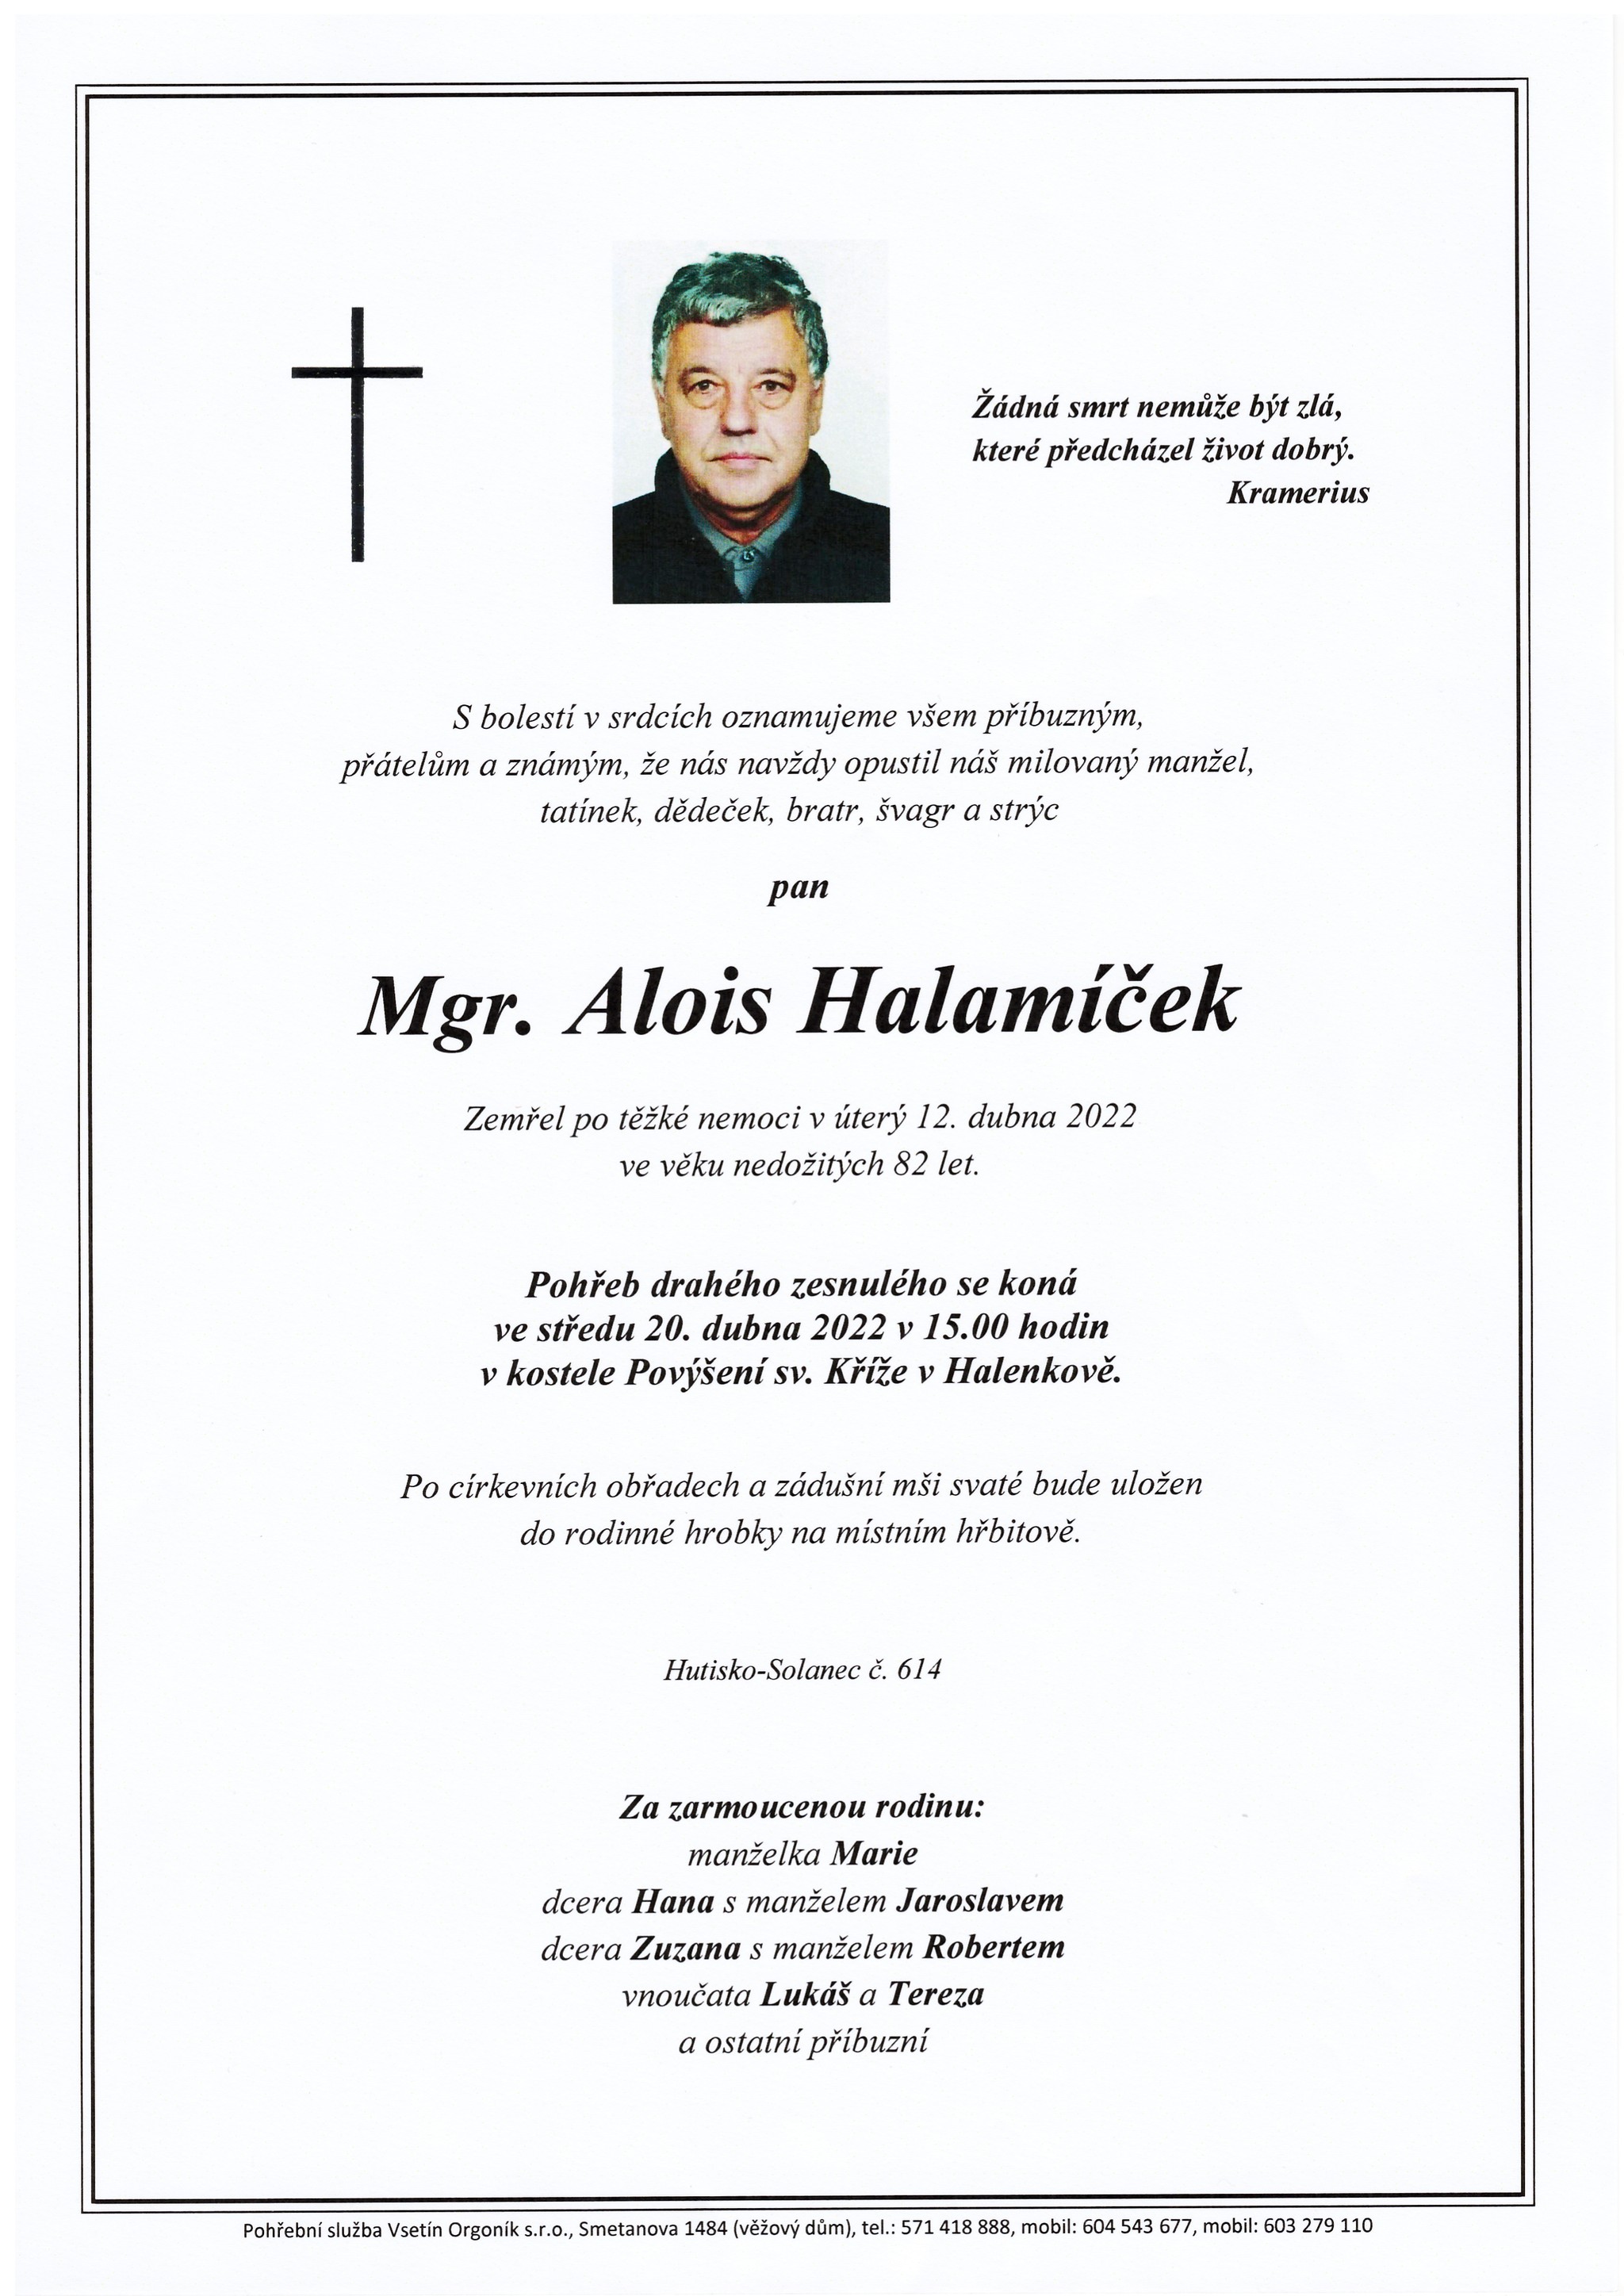 Mgr. Alois Halamíček